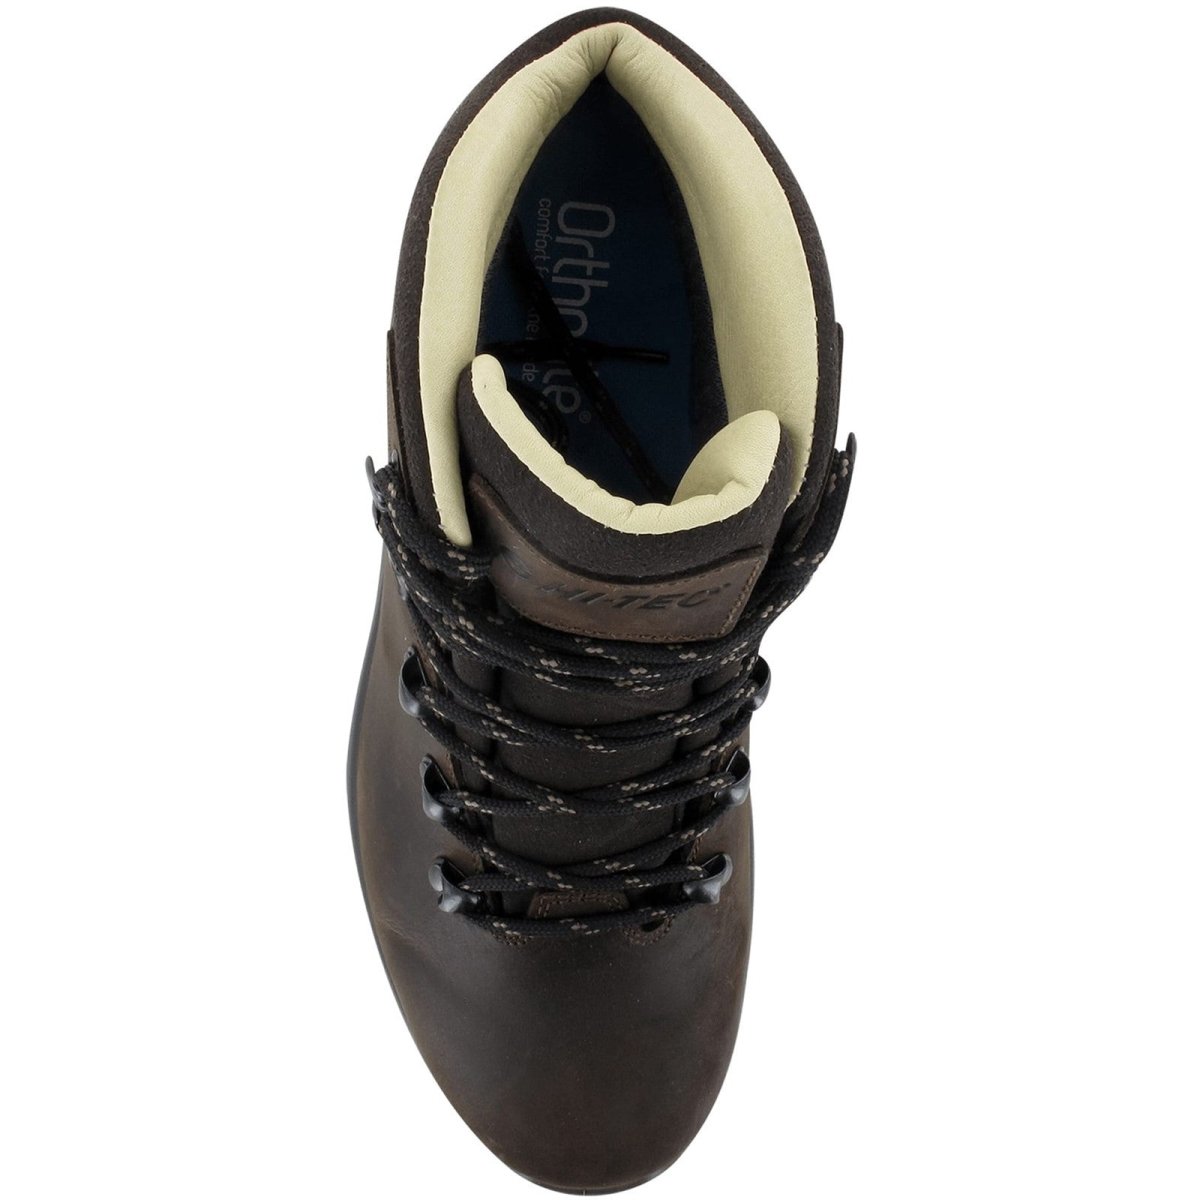 Hi-Tec Ravine Pro Boots - Shoe Store Direct